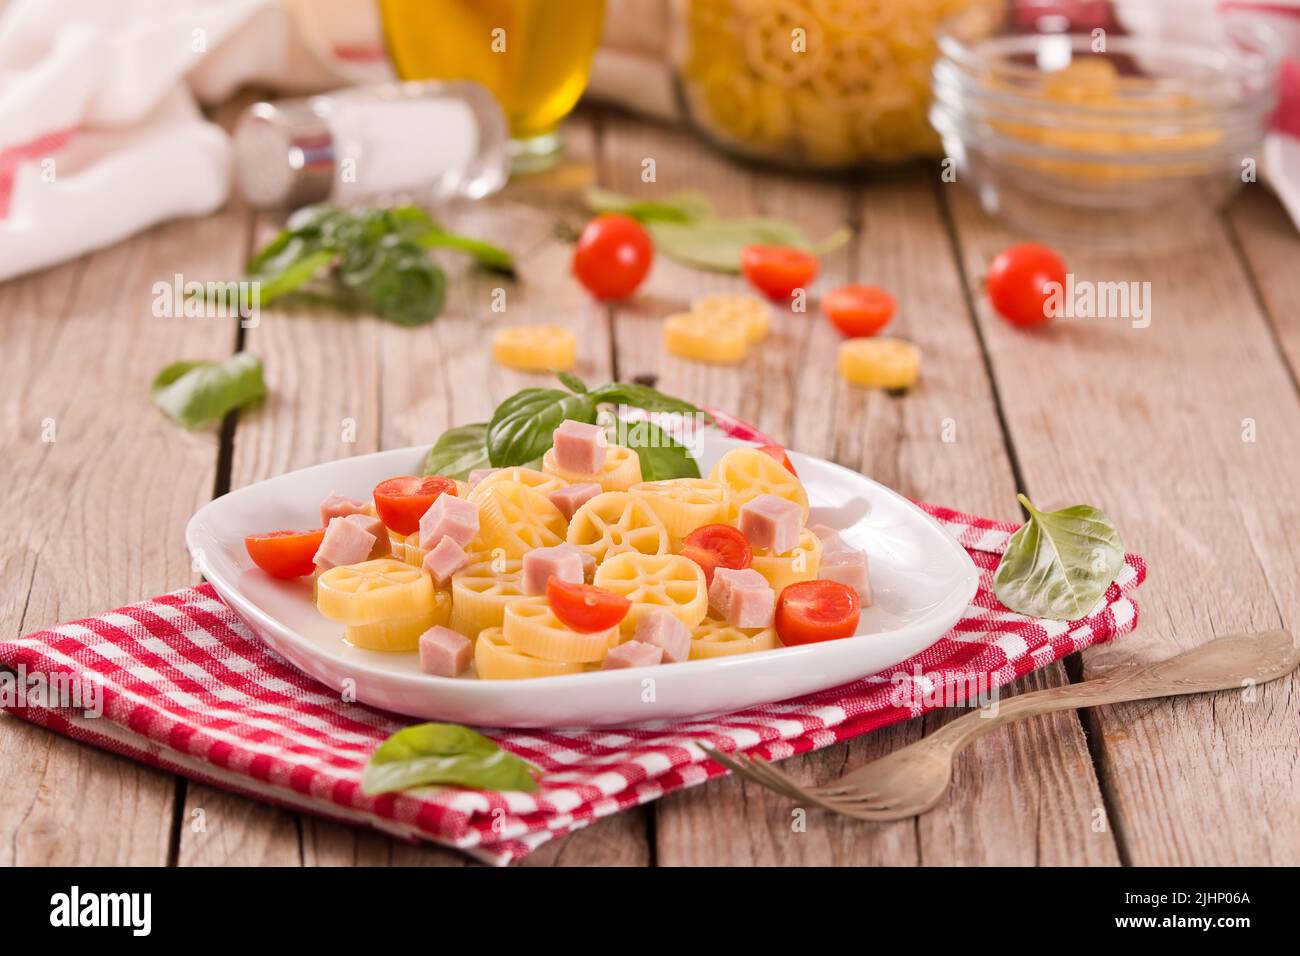 Ruote pasta with tomato and ham. Stock Photo